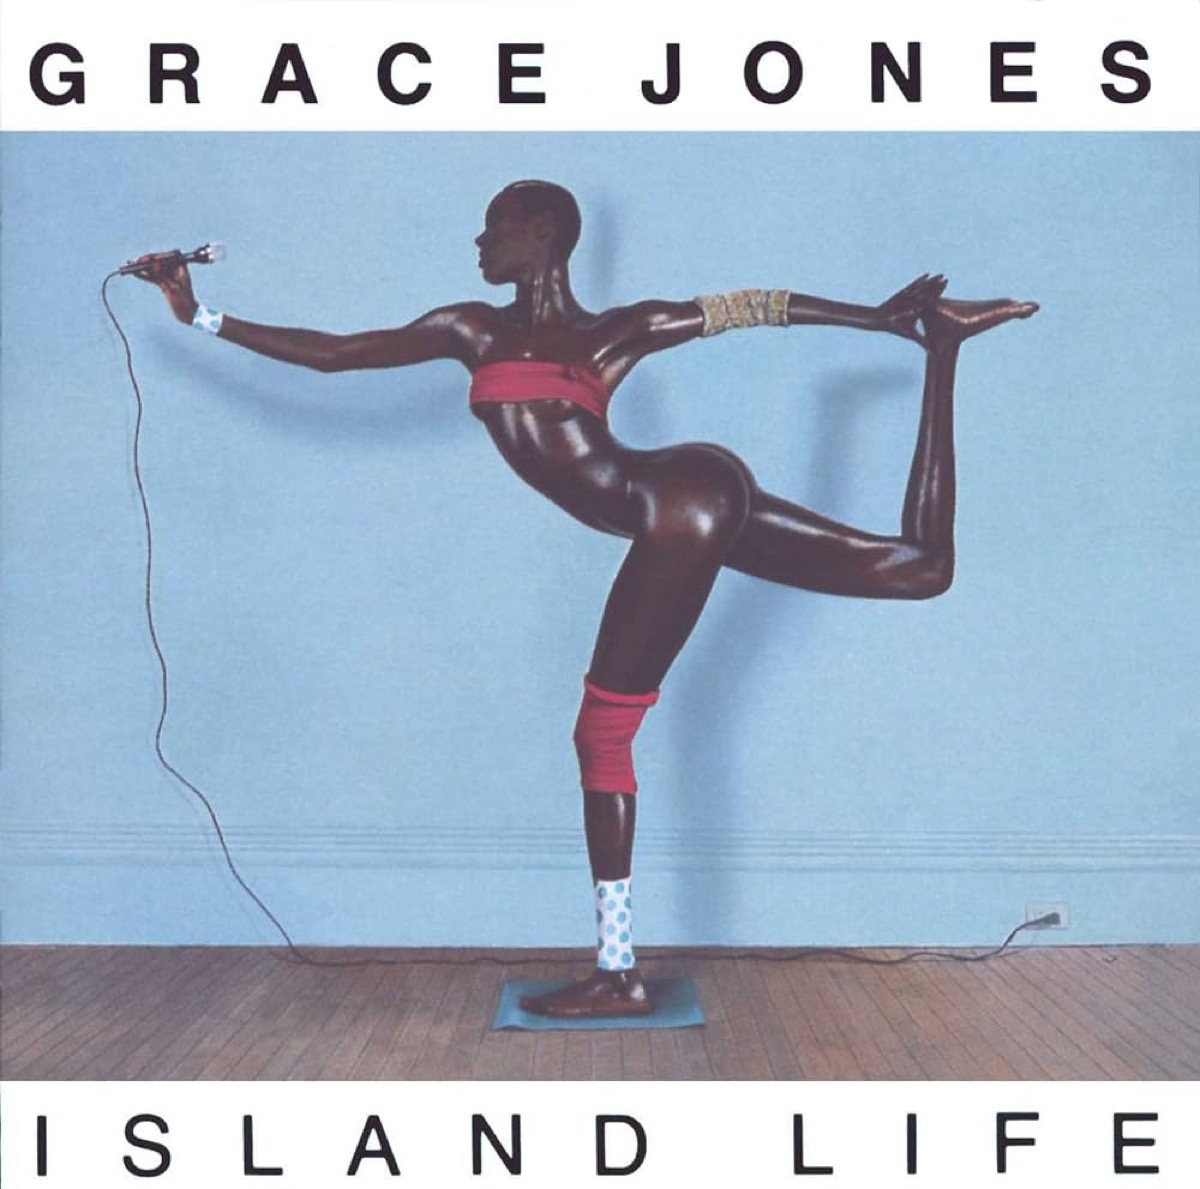 "Island Life" by Grace Jones album cover